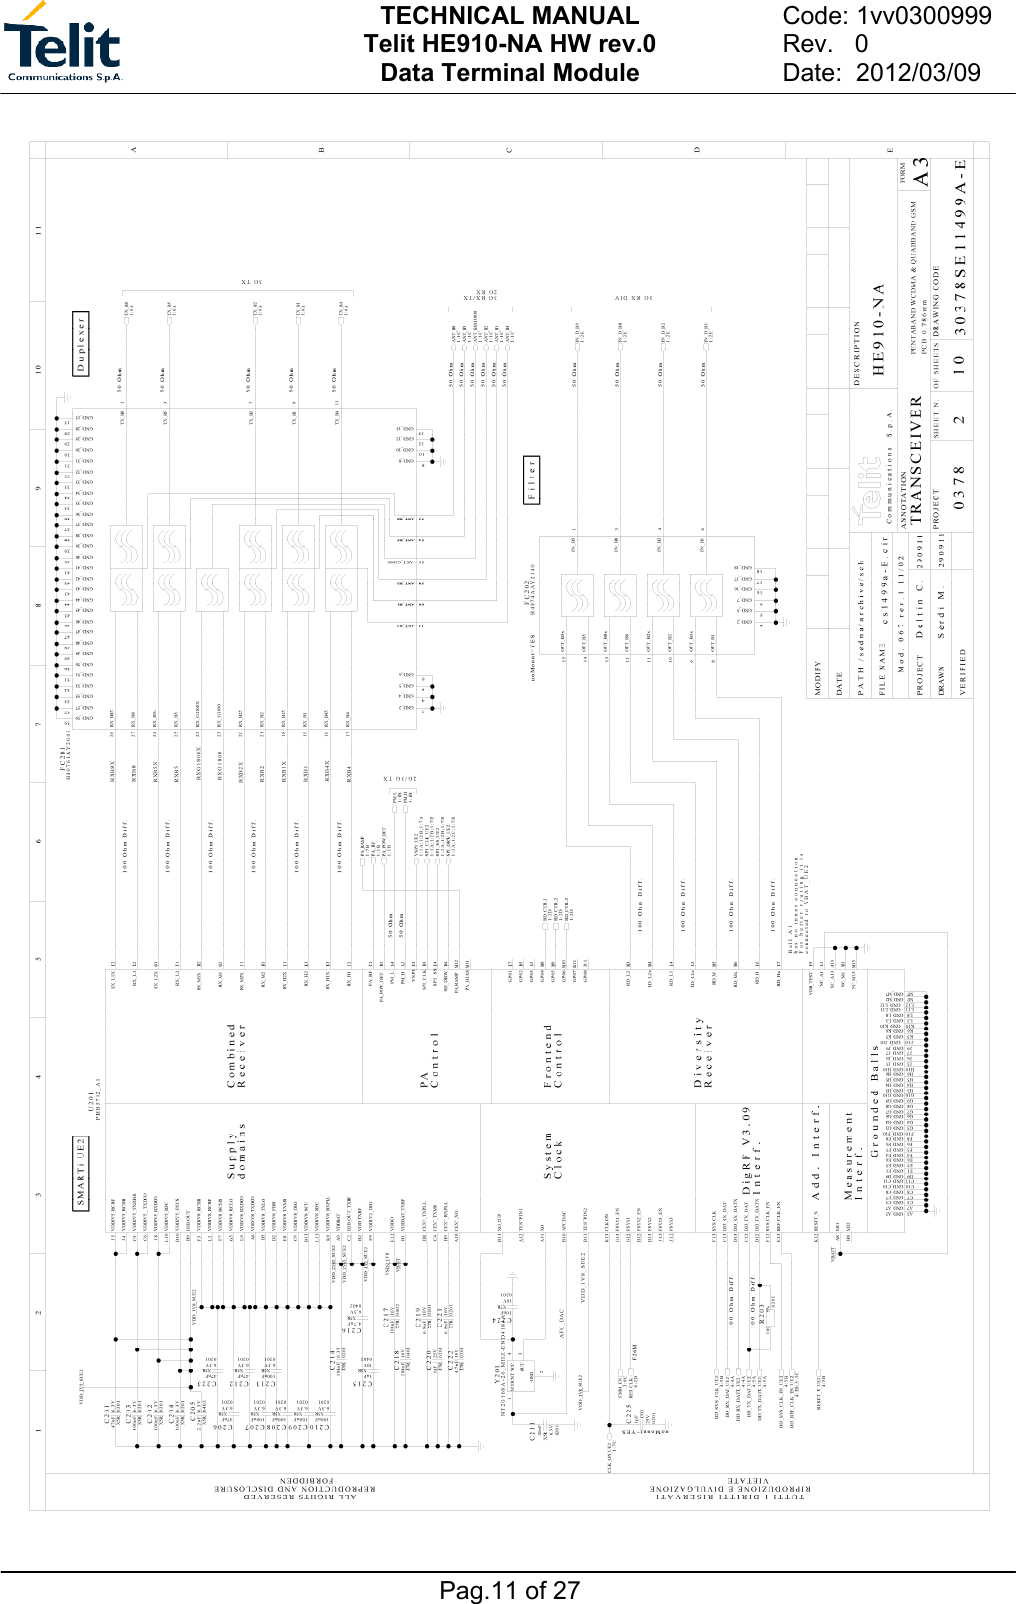 TECHNICAL MANUAL Telit HE910-NA HW rev.0 Data Terminal Module   Pag.11 of 27 Code: 1vv0300999    Rev.   0  Date:  2012/03/09  